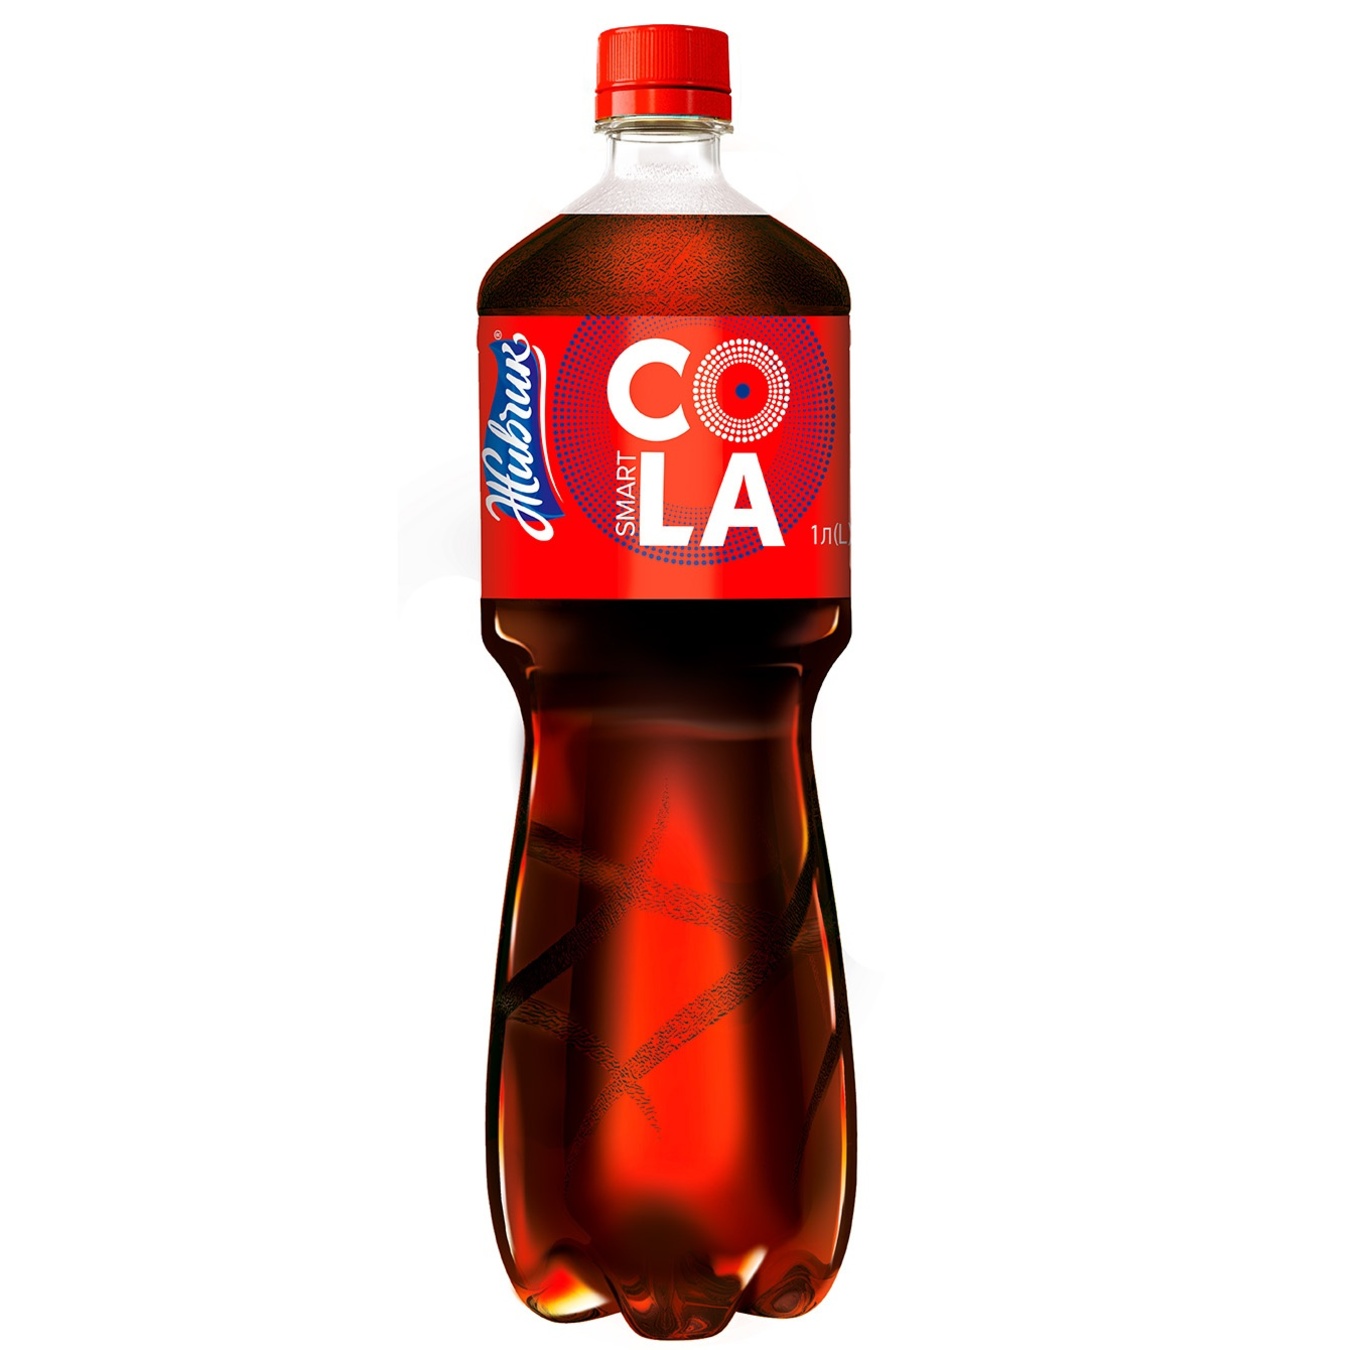 Zhivchyk Carbonated juice-based drink Smart Sola 1l